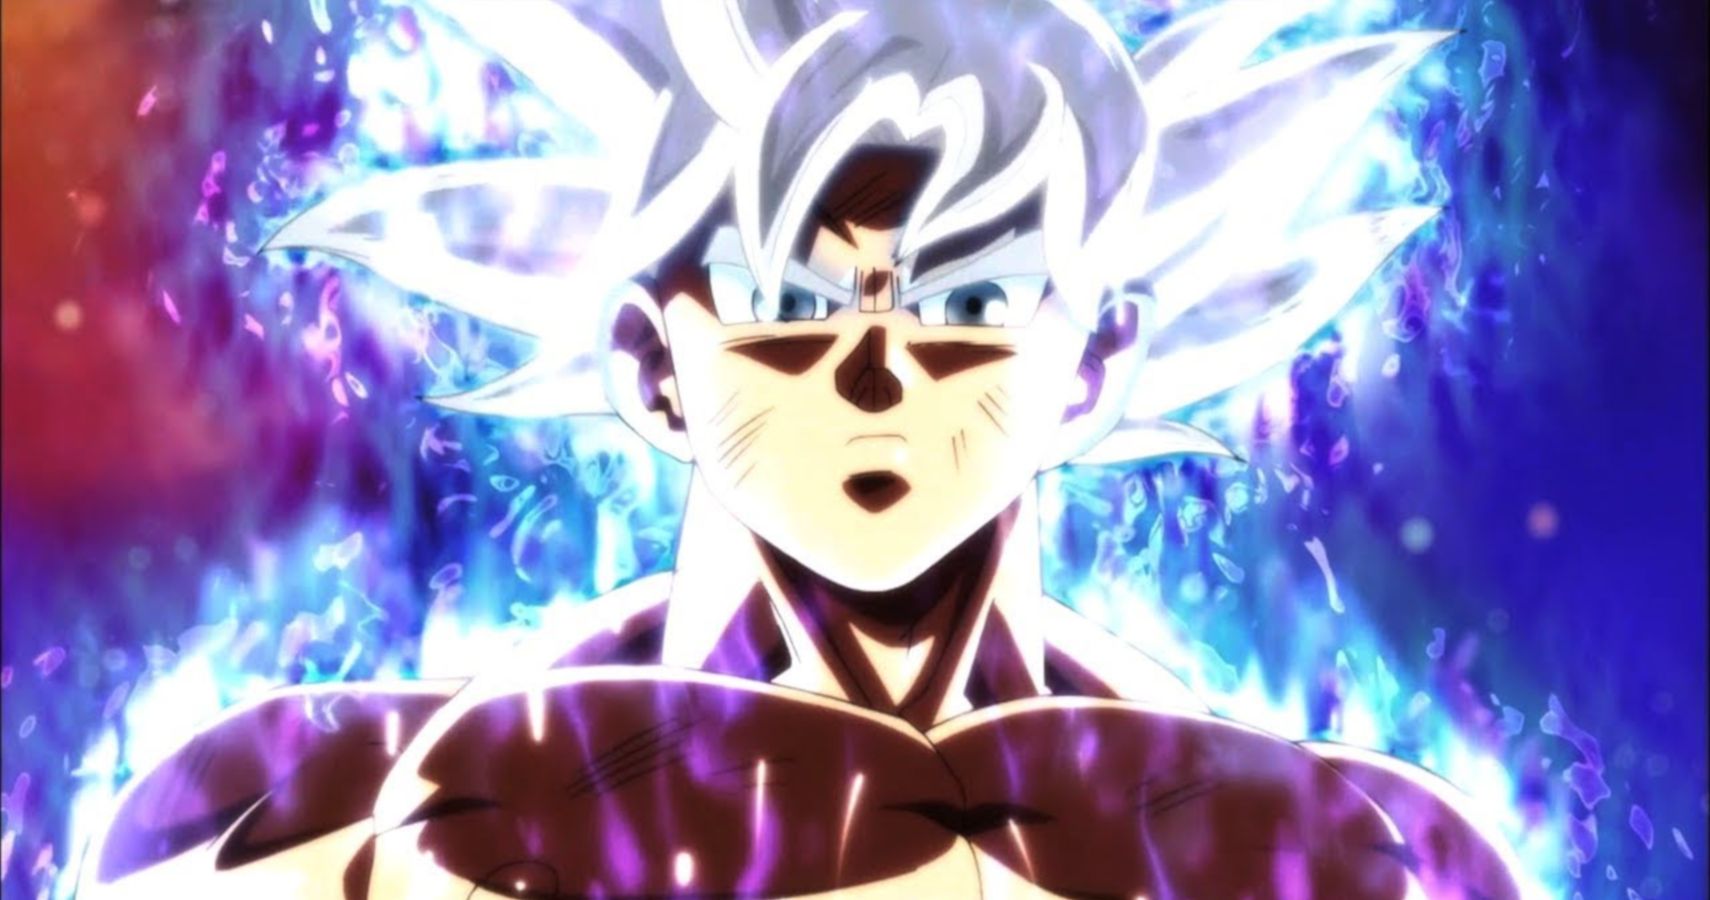 https://static1.srcdn.com/wordpress/wp-content/uploads/2019/03/Goku-in-Ultra-Instinct-form-from-Dragon-Ball-Super.jpg